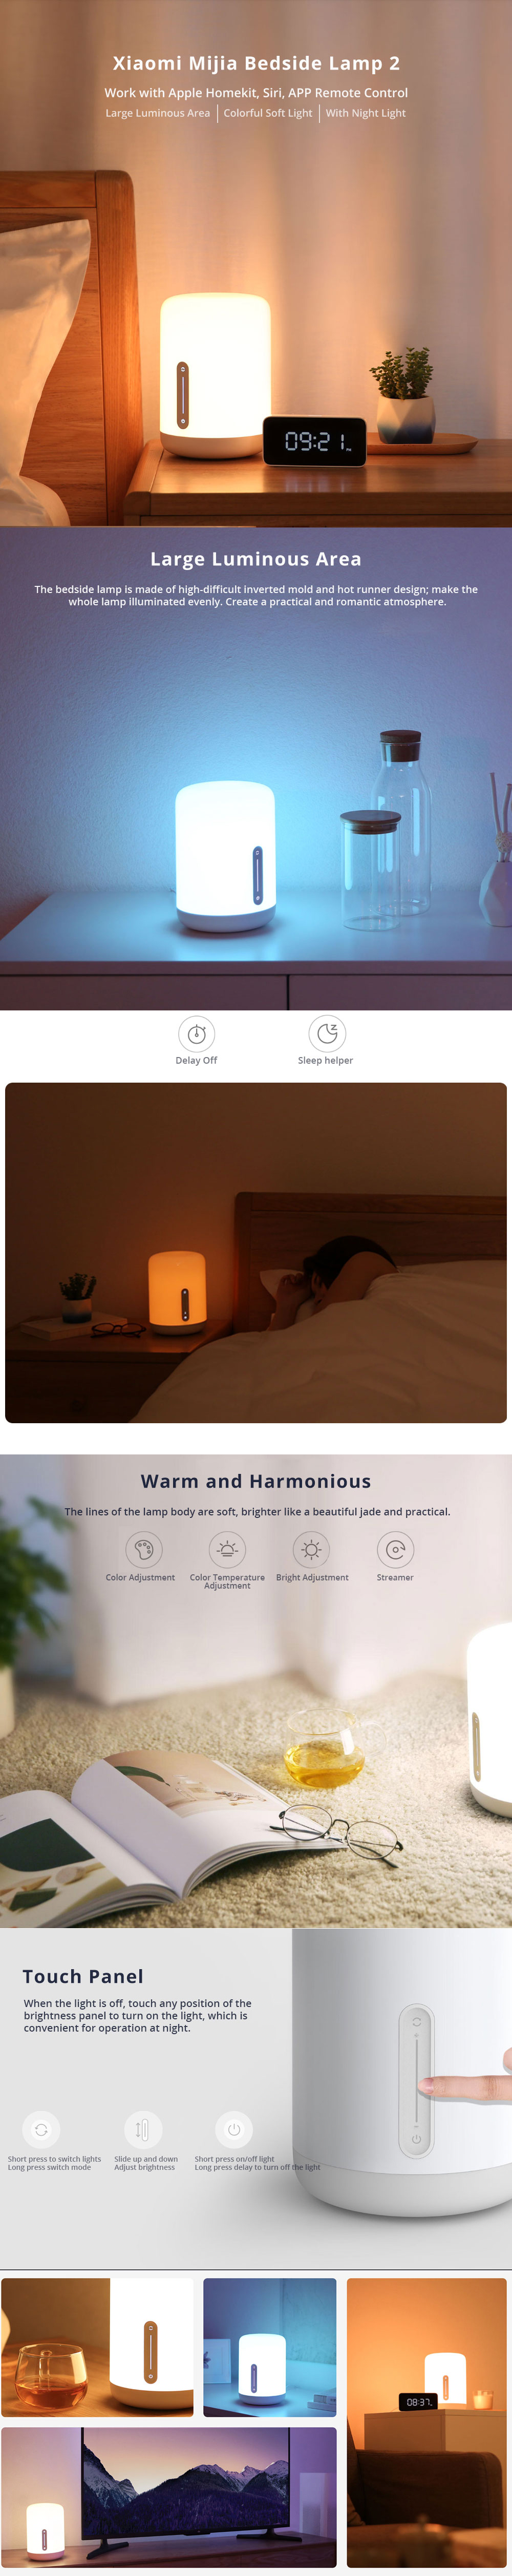 Xiaomi Mi Bedside Lamp 2 | Shop Now and Spend Less | Penguin.com.bd